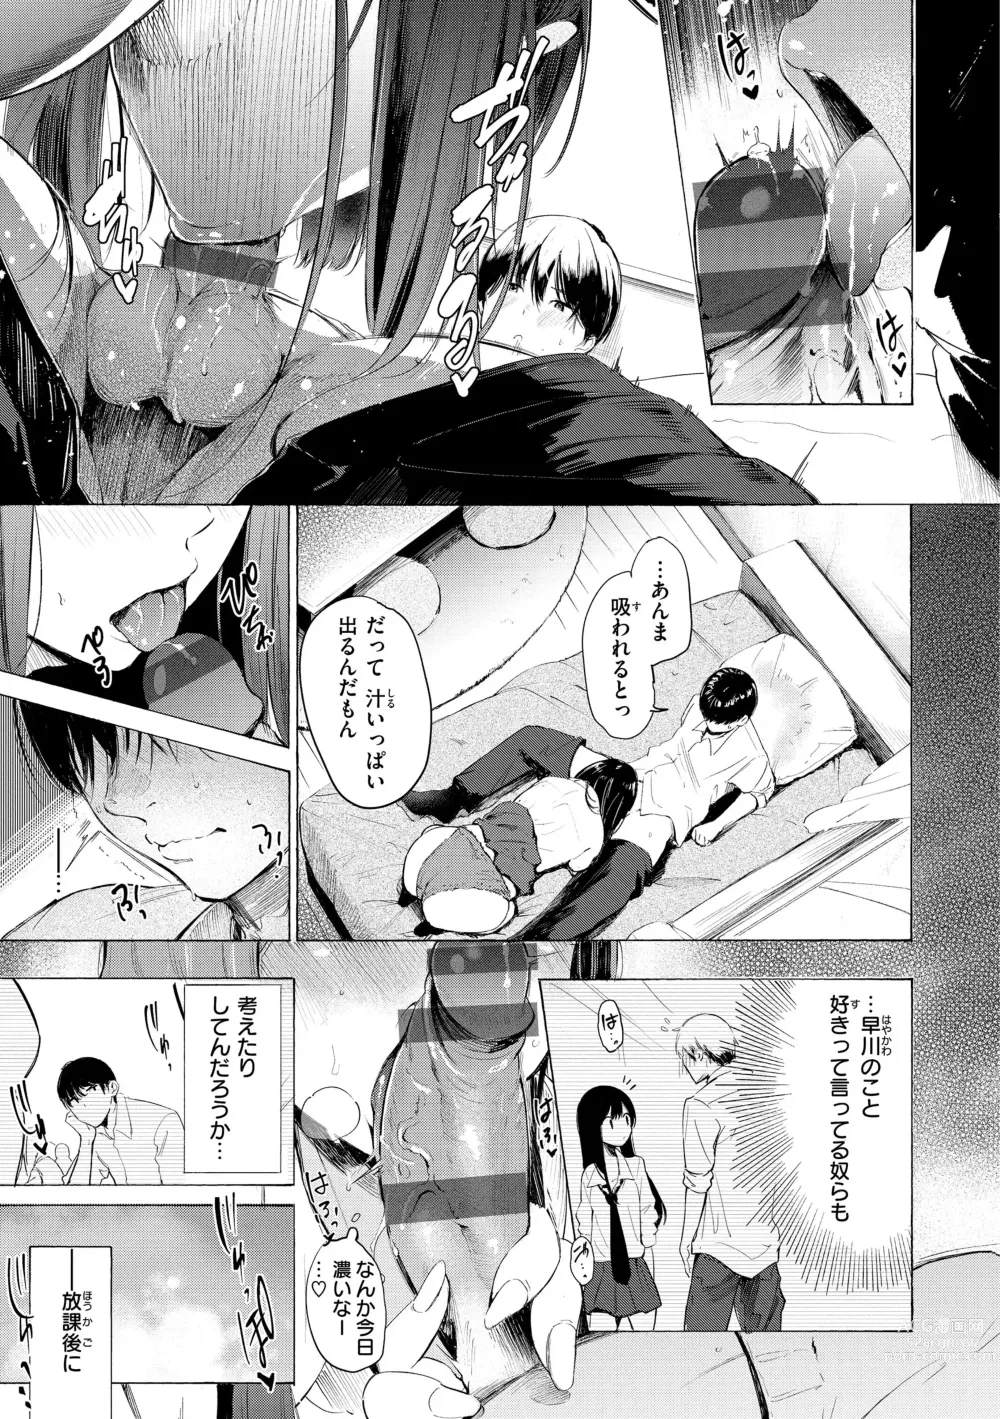 Page 179 of manga Frustration Girls - Mura Mura Girls ready for you!!